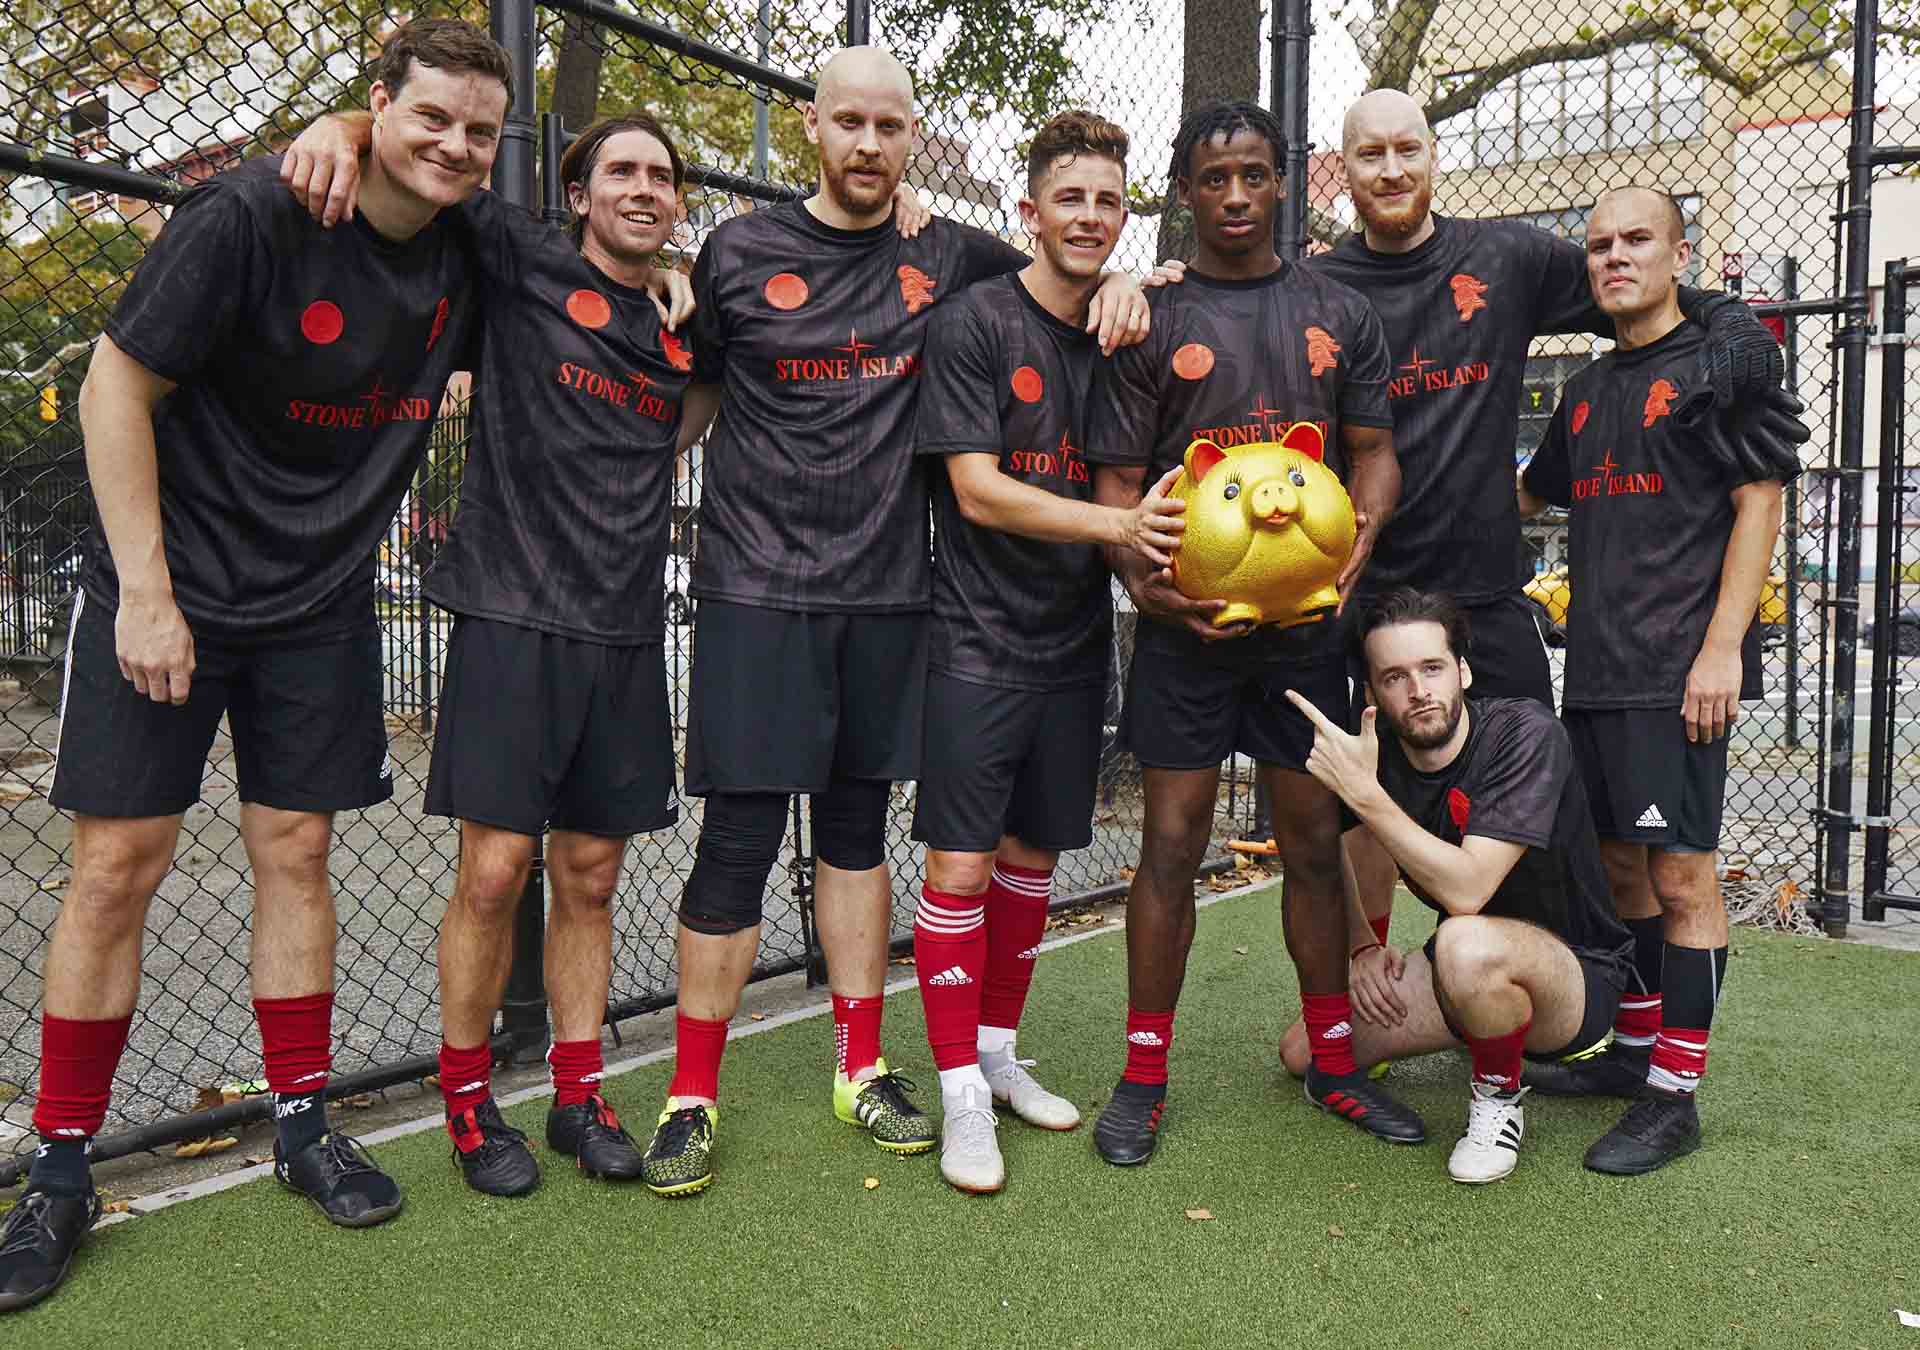 Chinatown Invitational — футбольный турнир в центре Нью-Йорка, который сотрудничает со Stone Island